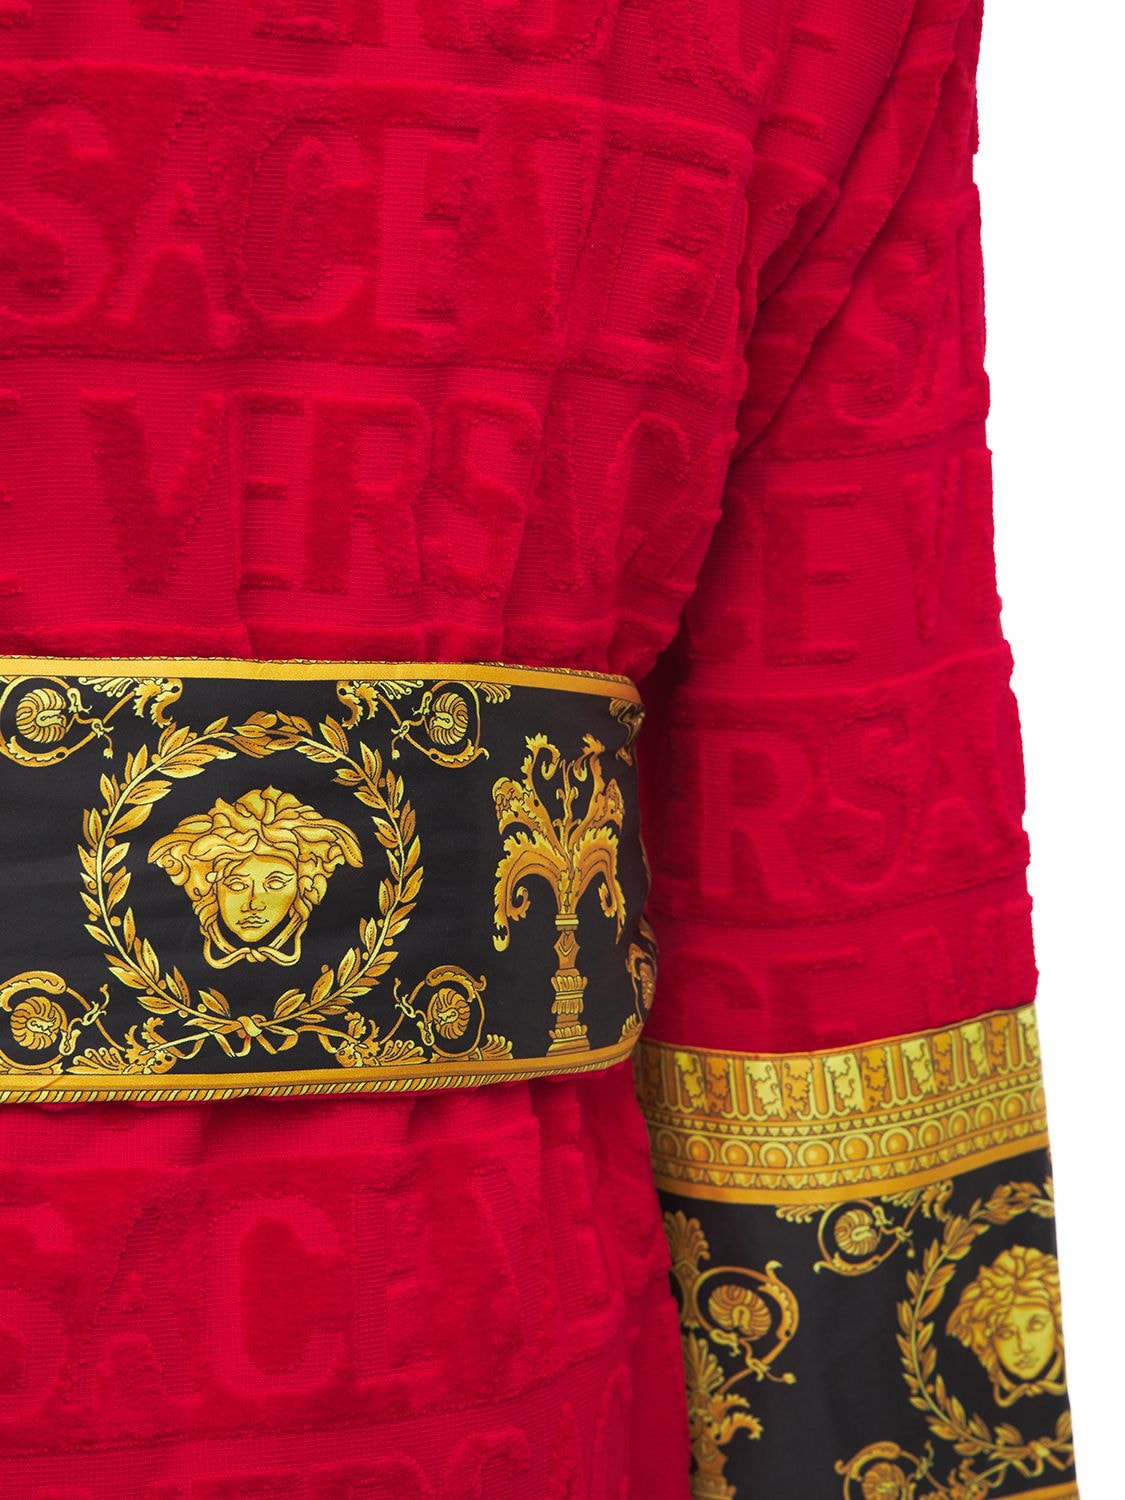 Luxury bathrobe available in all sizes . Brand:Versace,LV,FENDI . Price: .  #ibadanlingeries #ibundies #pantsandbrainib #ibvendor…